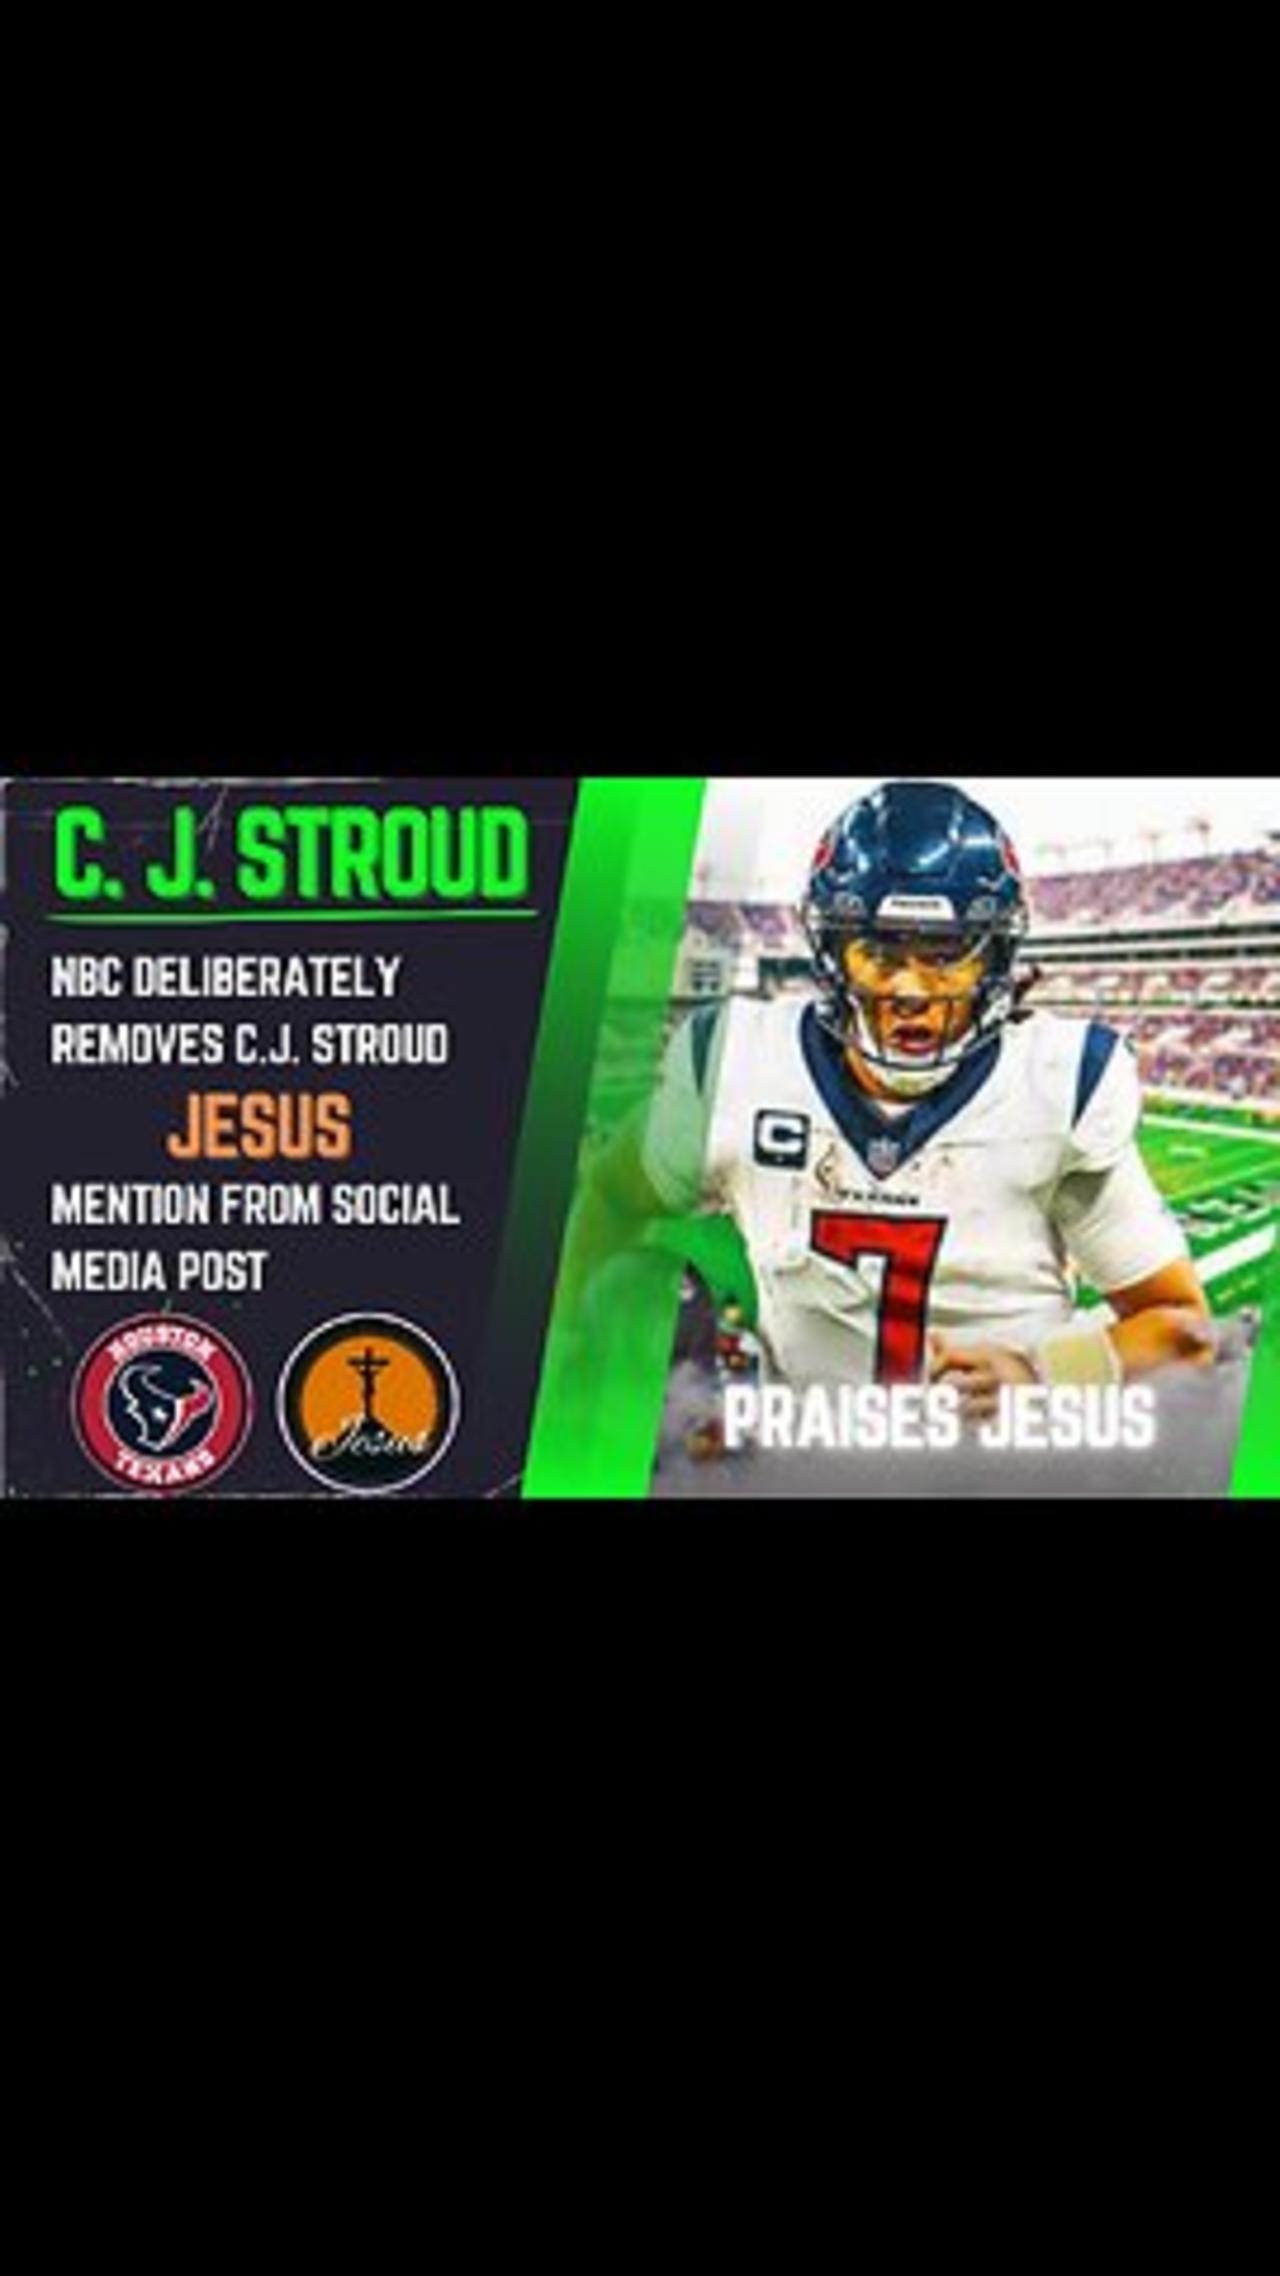 NBC deliberately removes C.J. Stroud Jesus mention from social media post